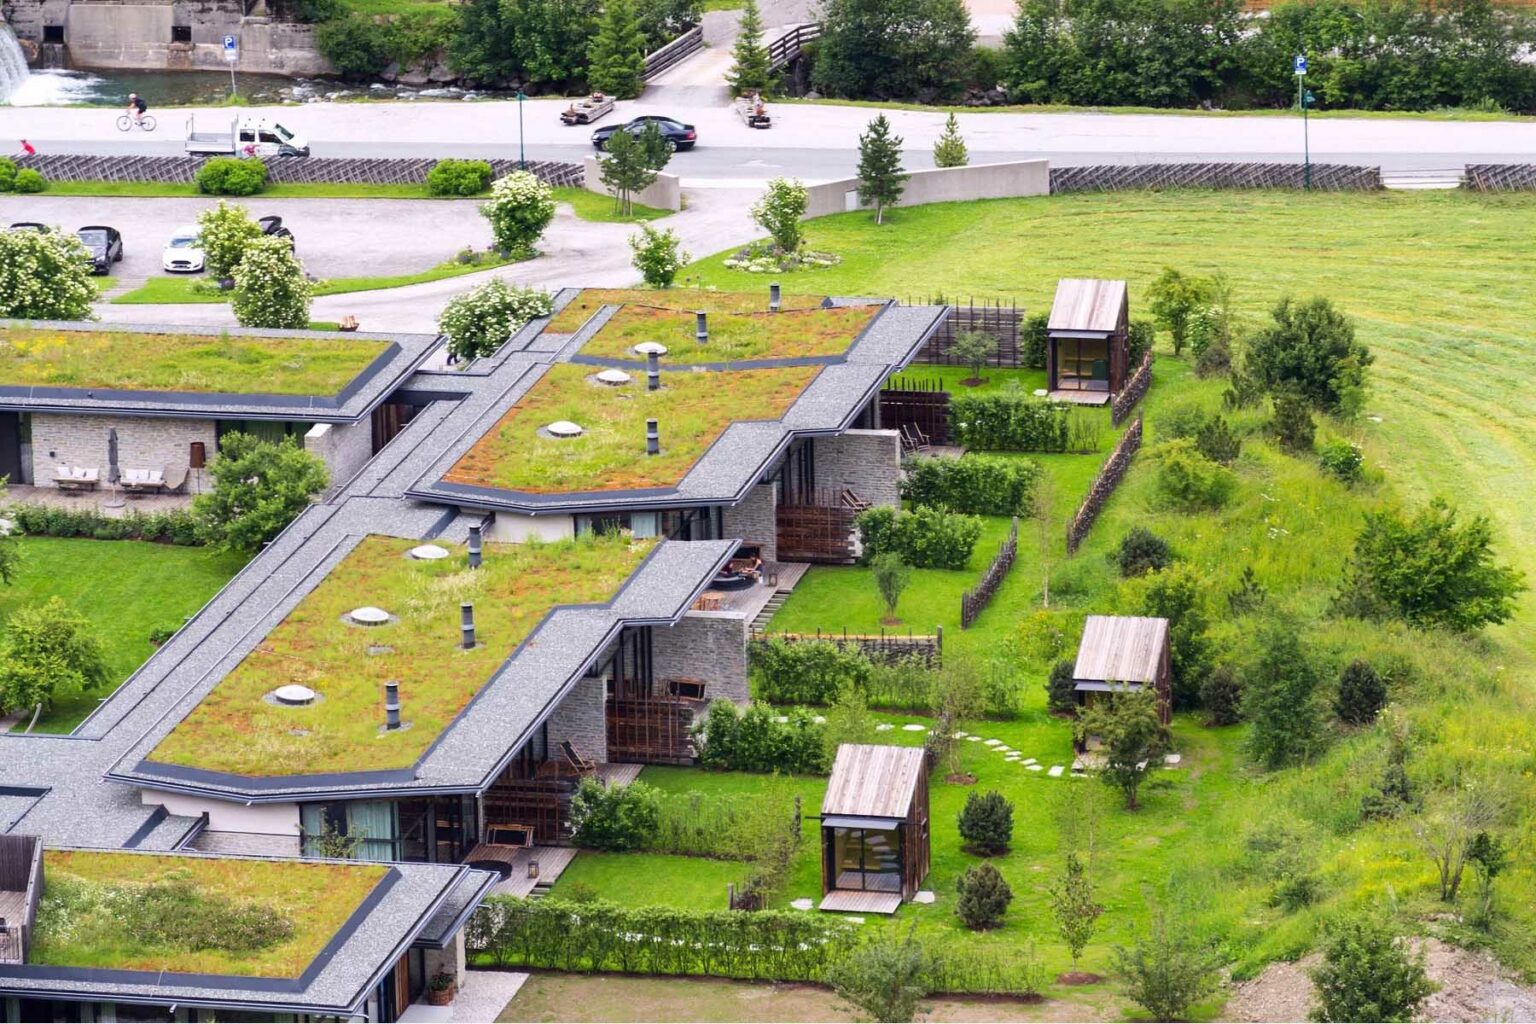 Sustainable housing Austria